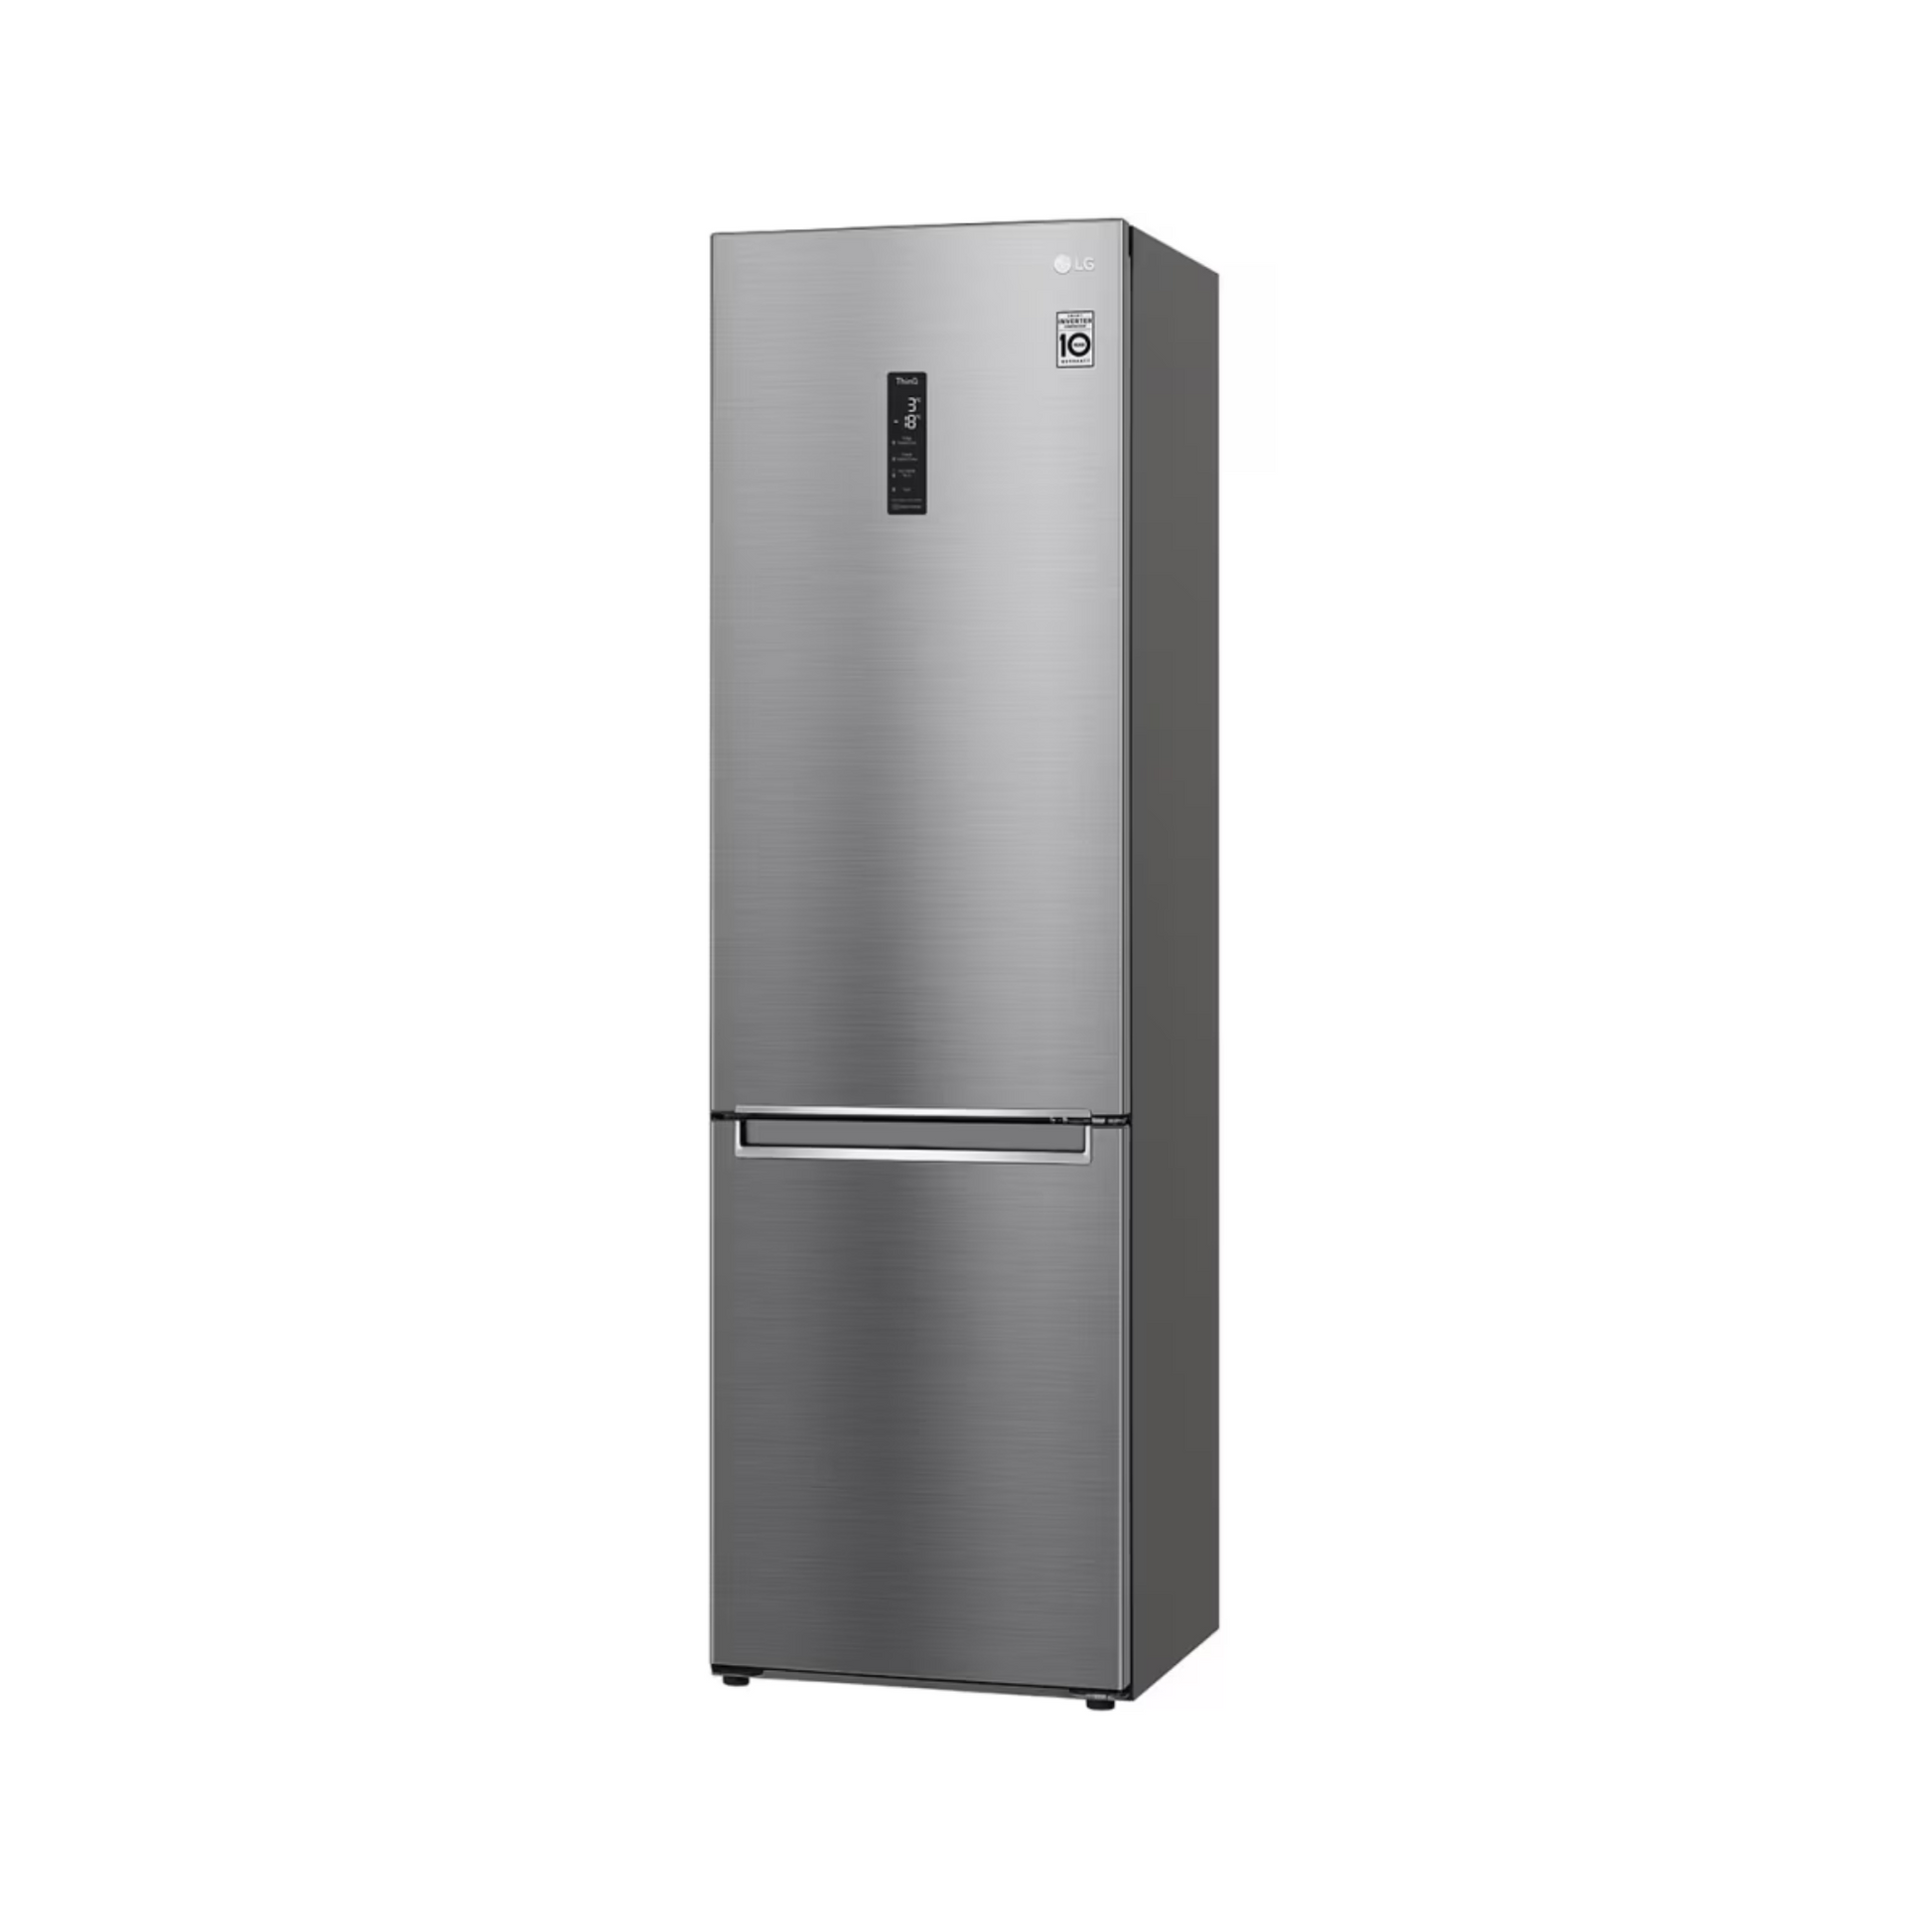 LG 384L Smart Energy Saving Combined Refrigerator, GBB72PZUGN